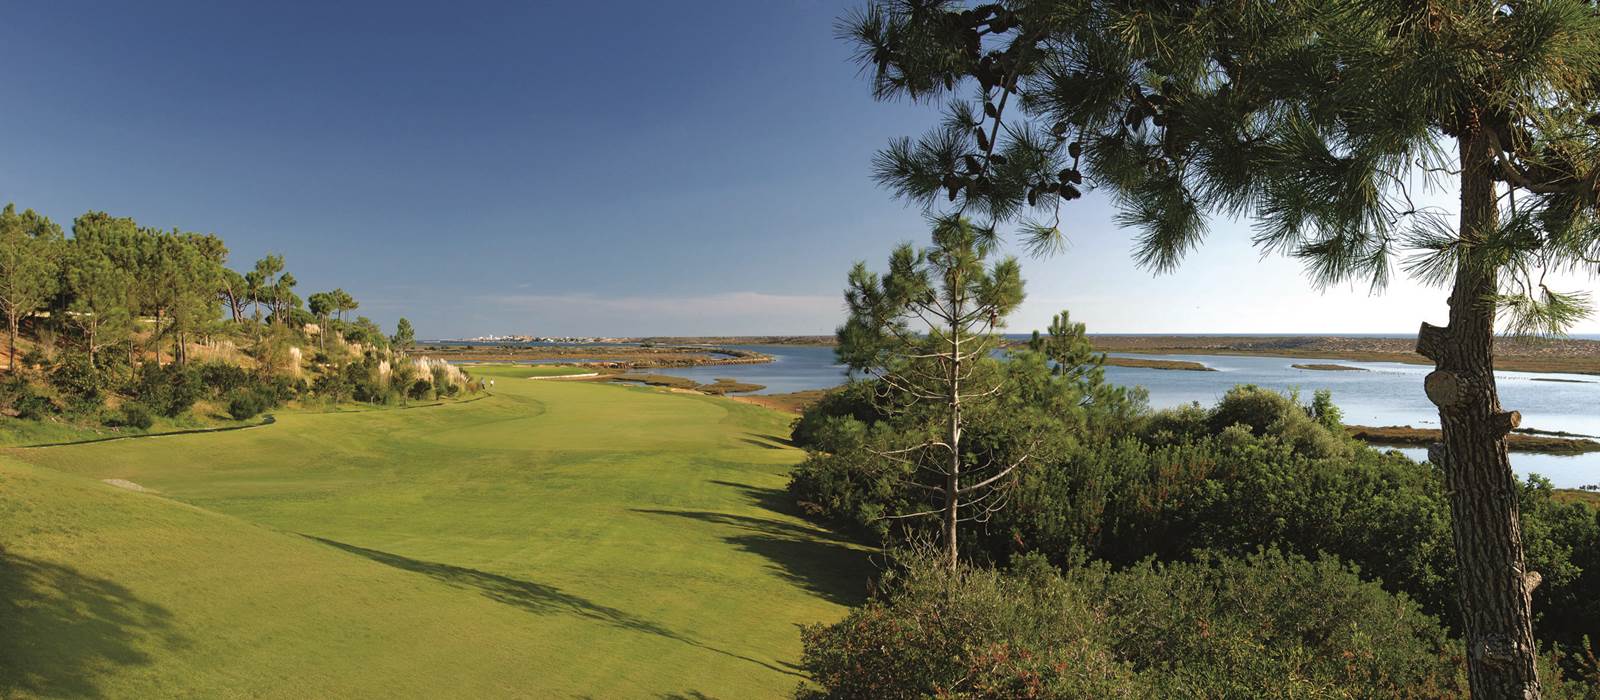 7th Hole at San Lorenzo Golf Course, Algarve